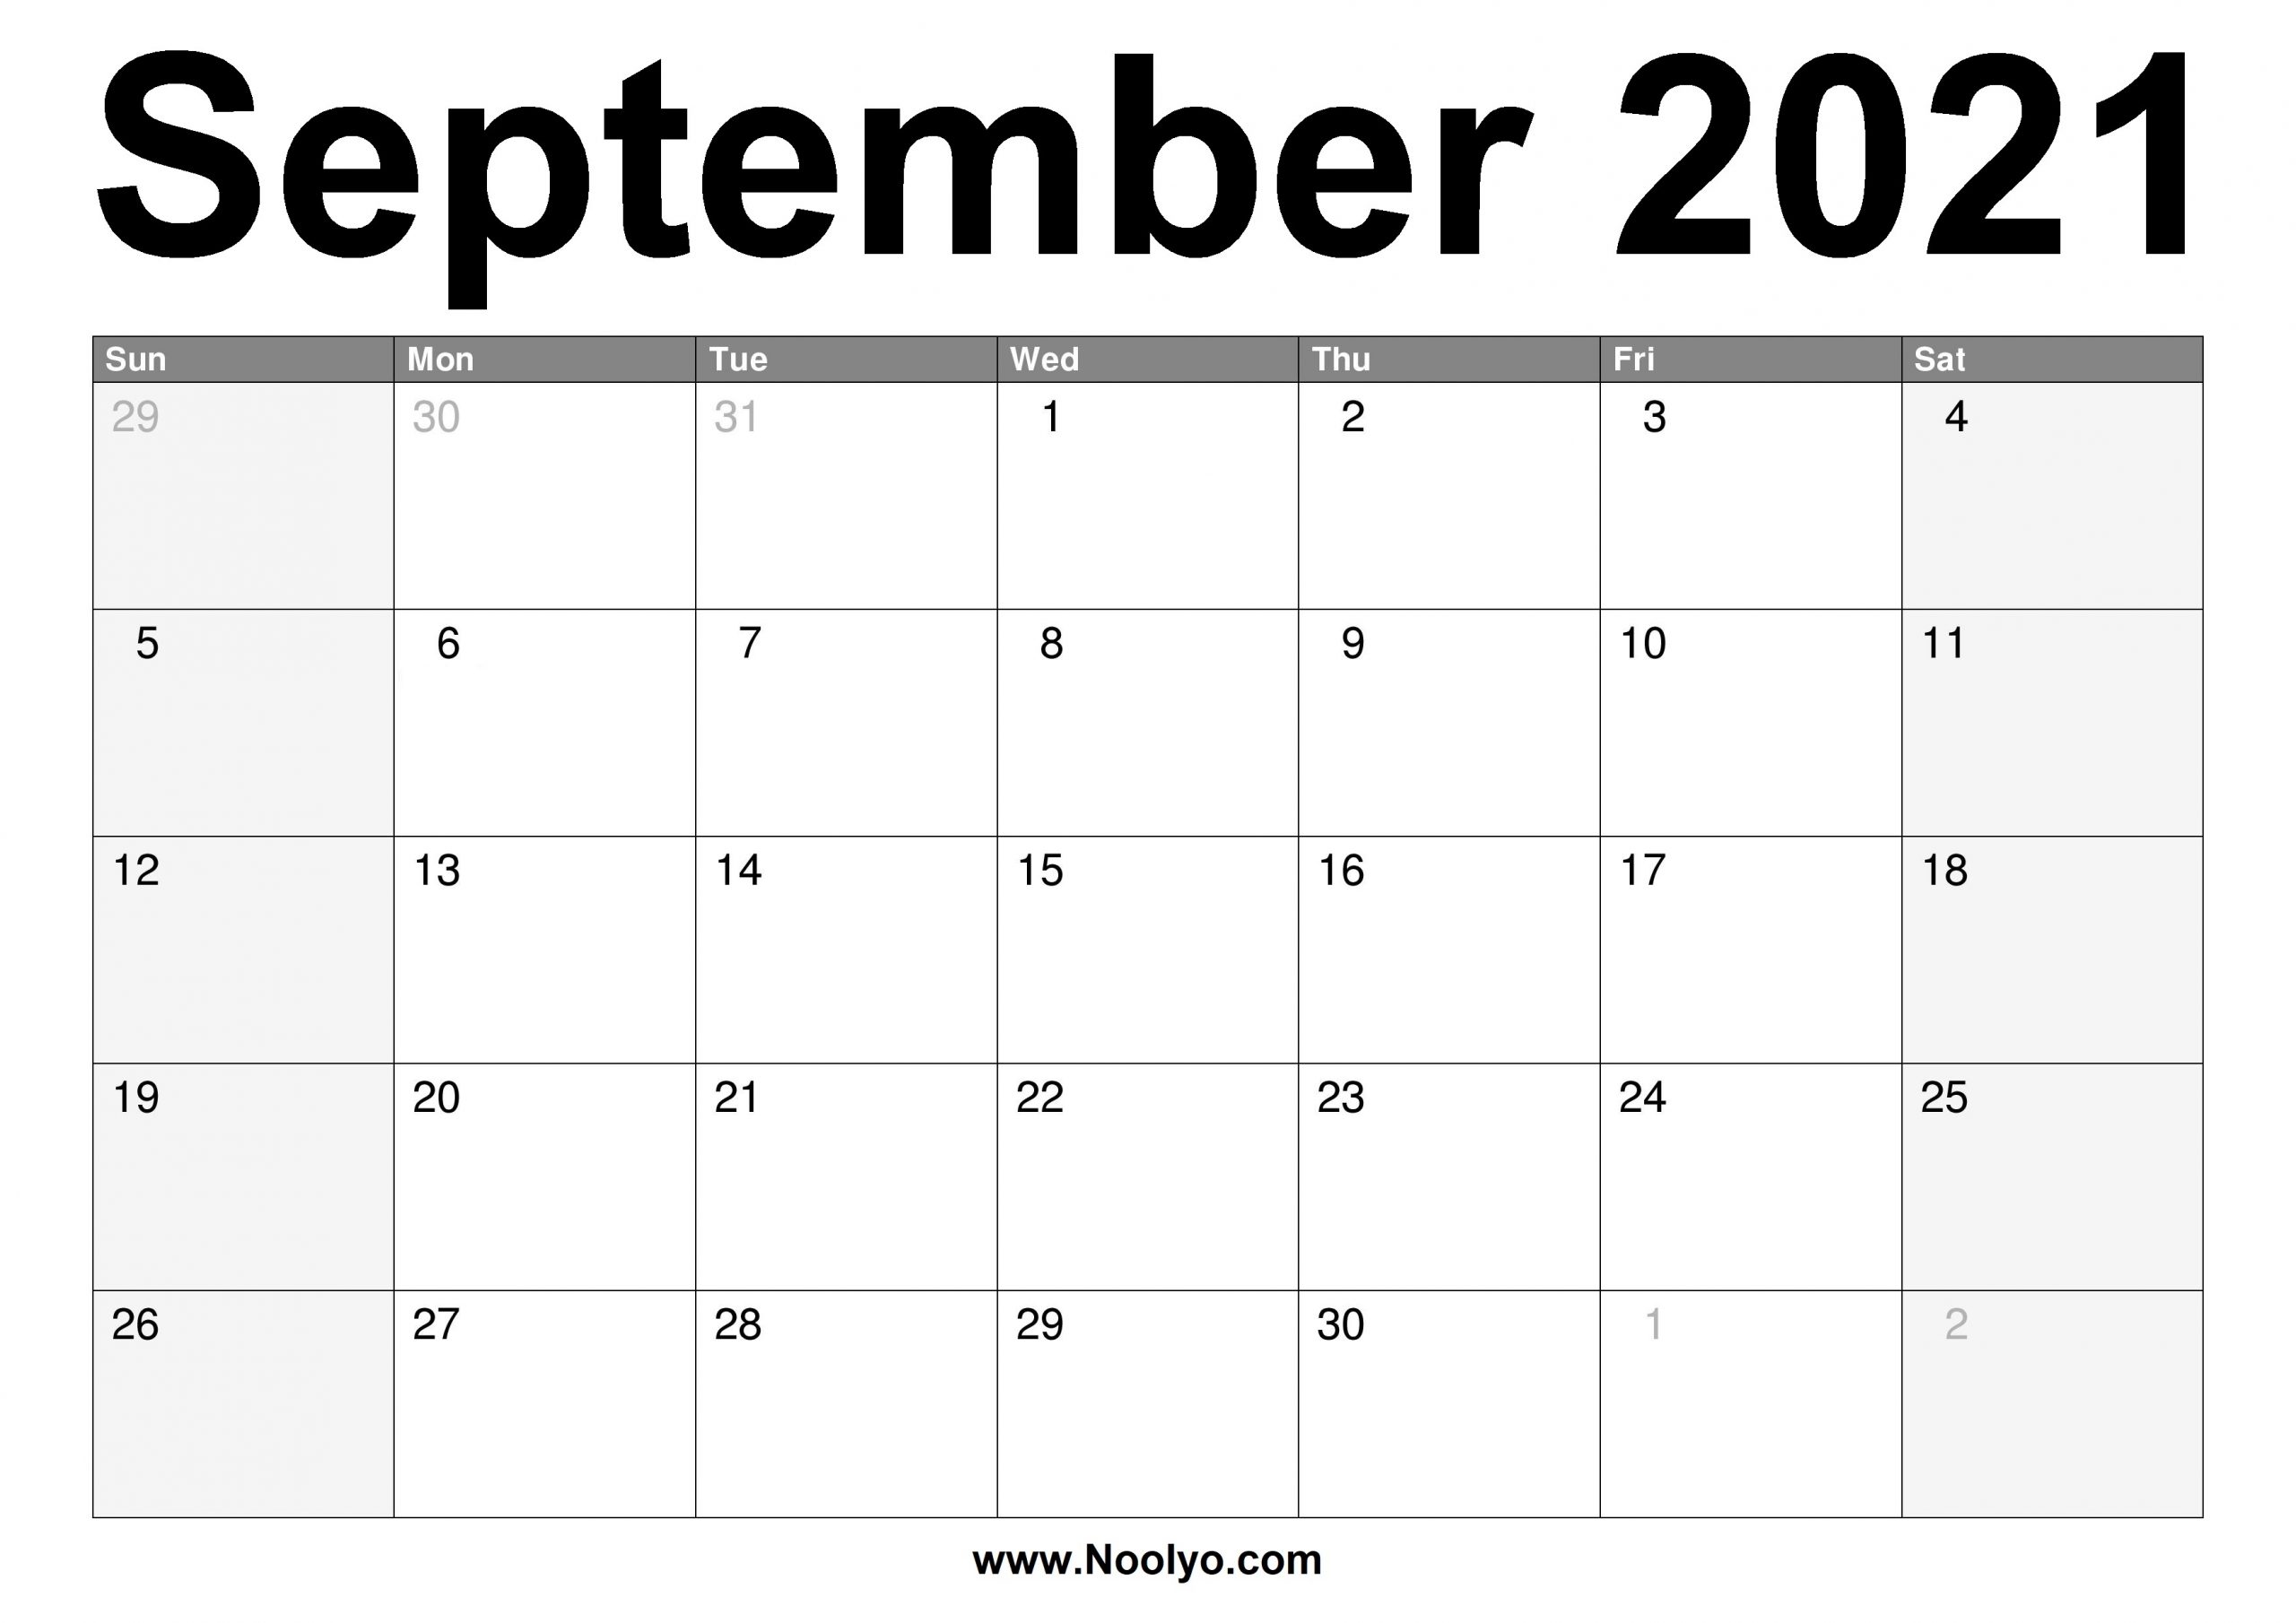 September 2021 Calendar Printable - Free Download - Noolyo